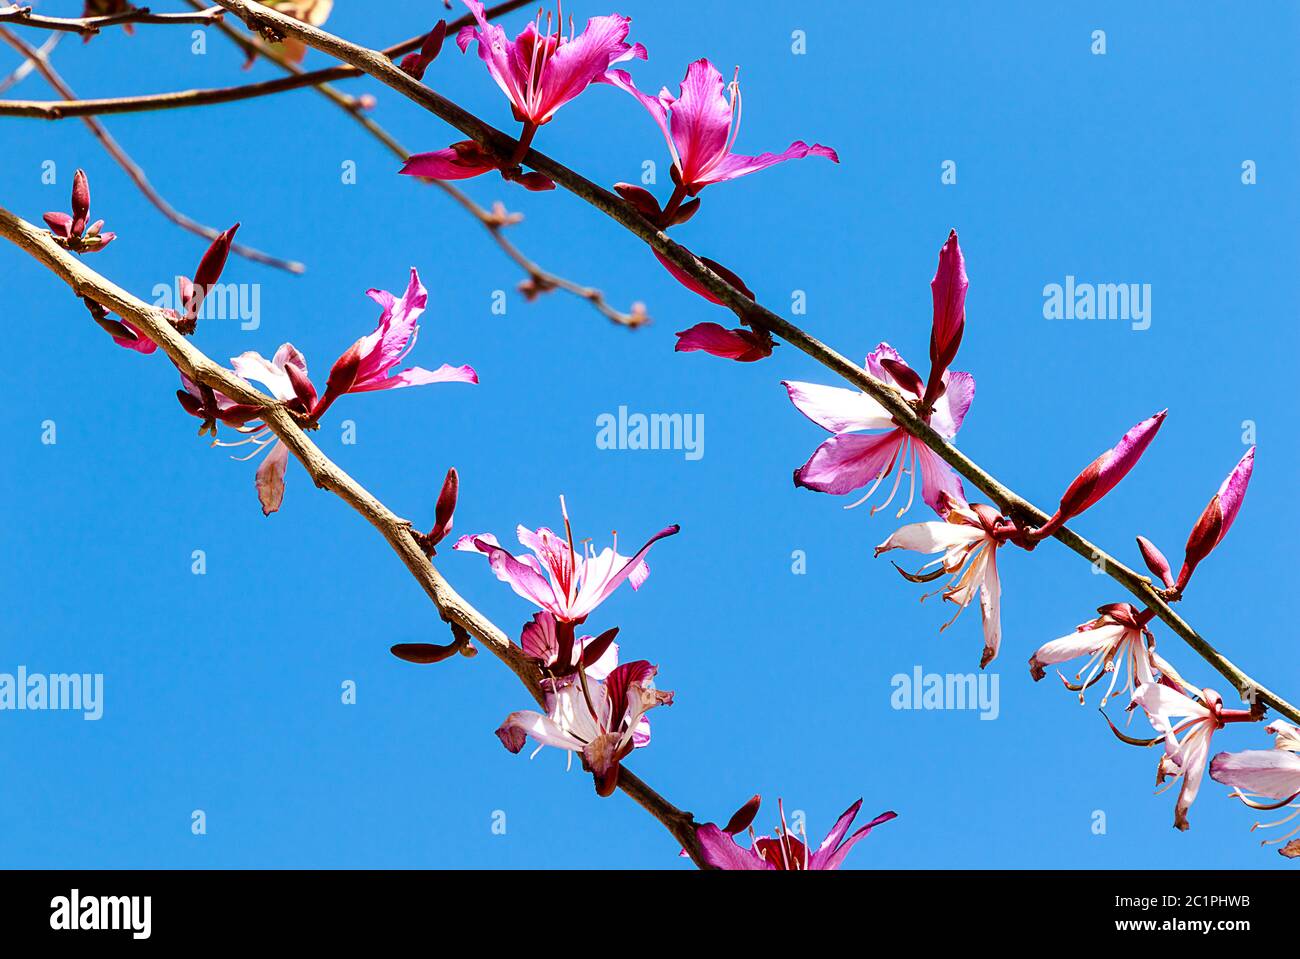 Bauhinia x blakeana flowering tree. Common Names: Blake's Bauhinia, Hong Kong Orchid Tree, Hong Kong Bauhinia, Butterfly Tree. Stock Photo